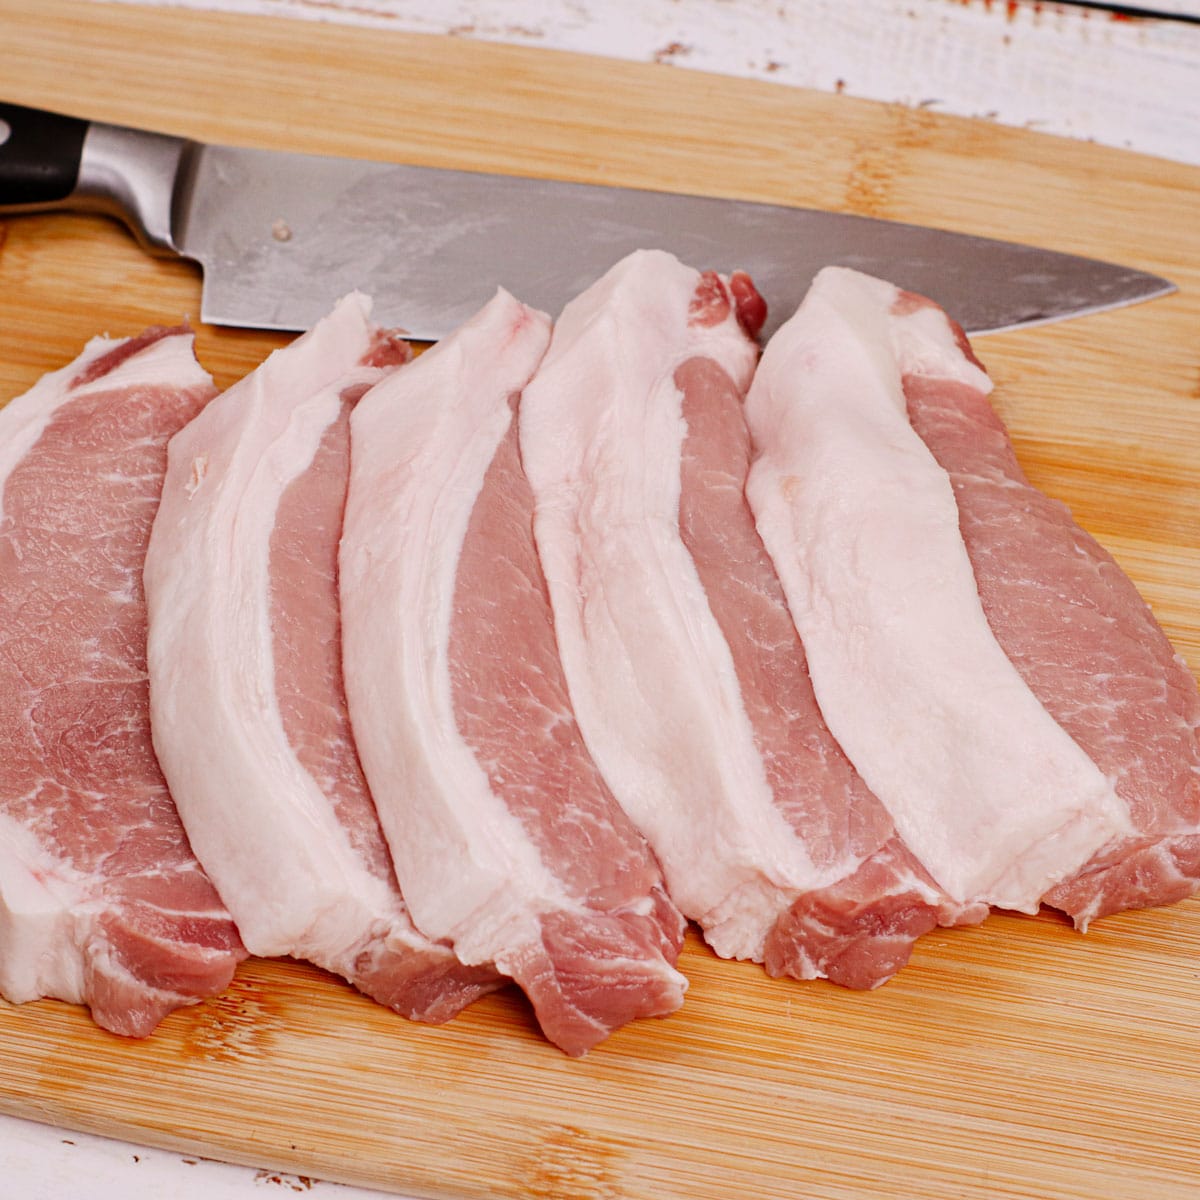 Thick cut 1/2-inch boneless, skinless pork chops.